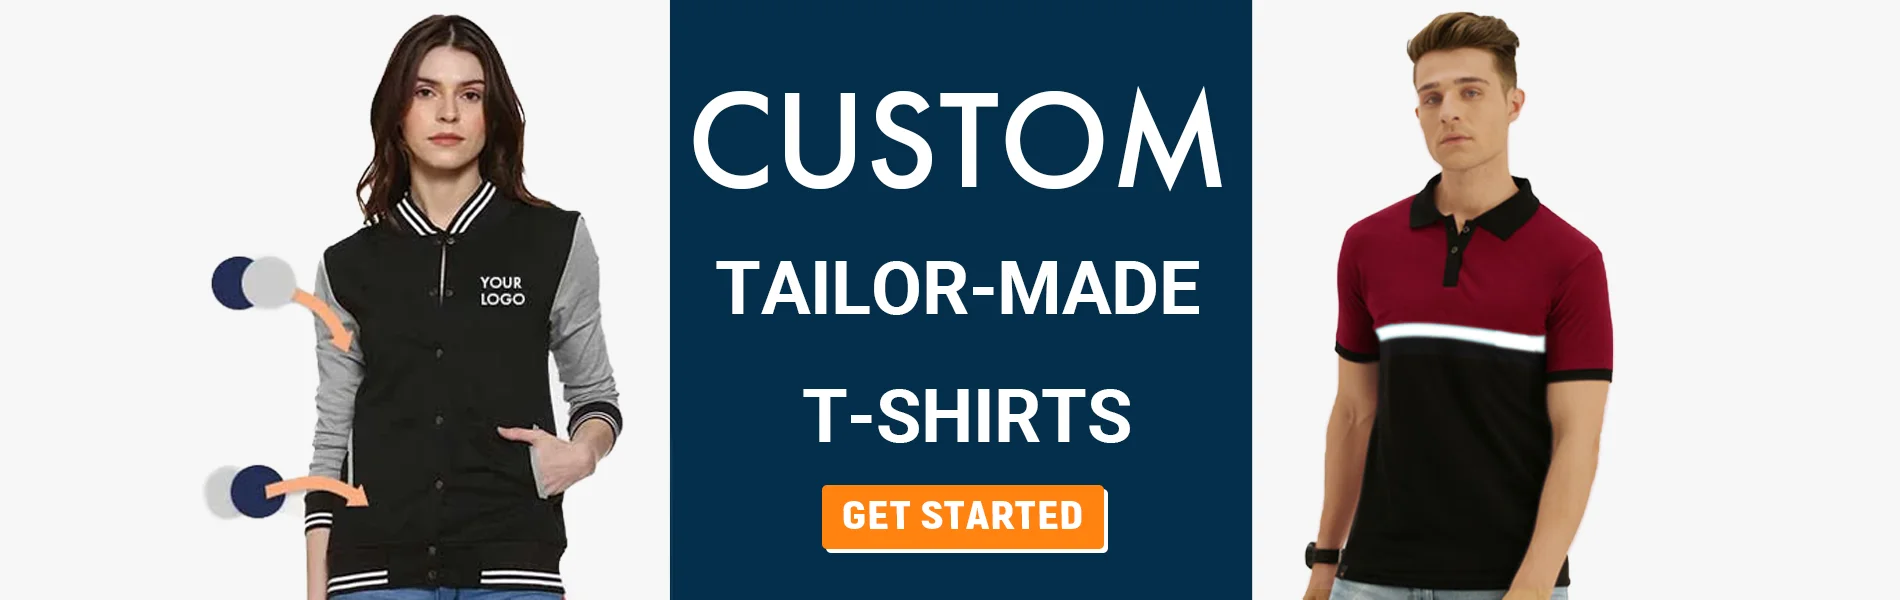 custom tailormade t-shirts ooty